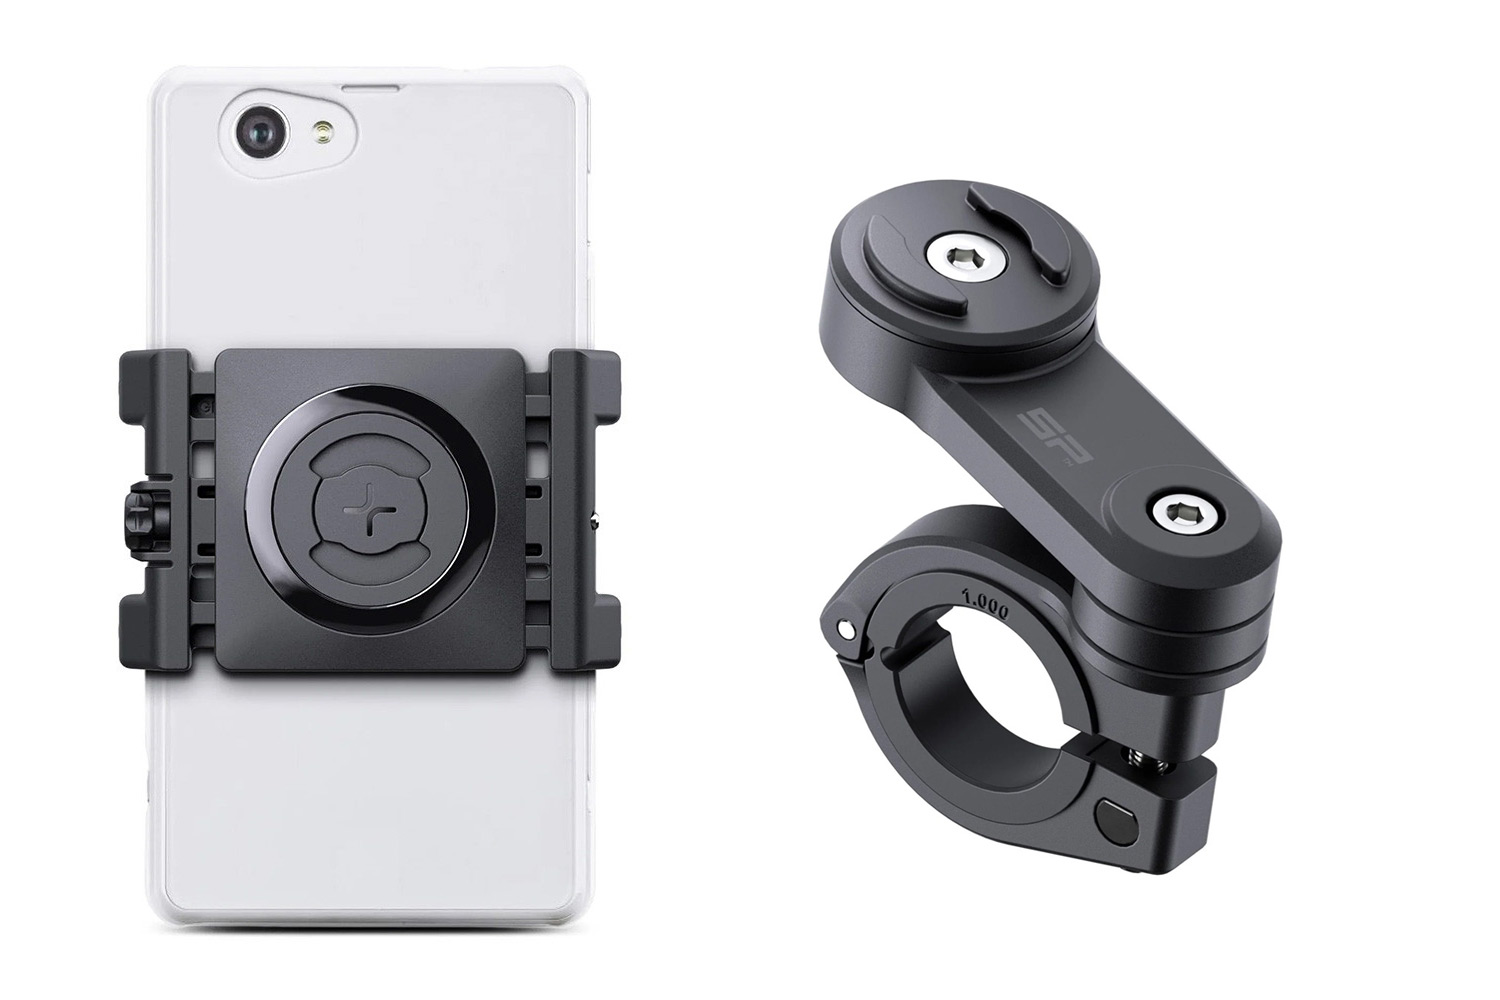 Soporte Universal Flexible para Smartphone - 60-85mm - Negro